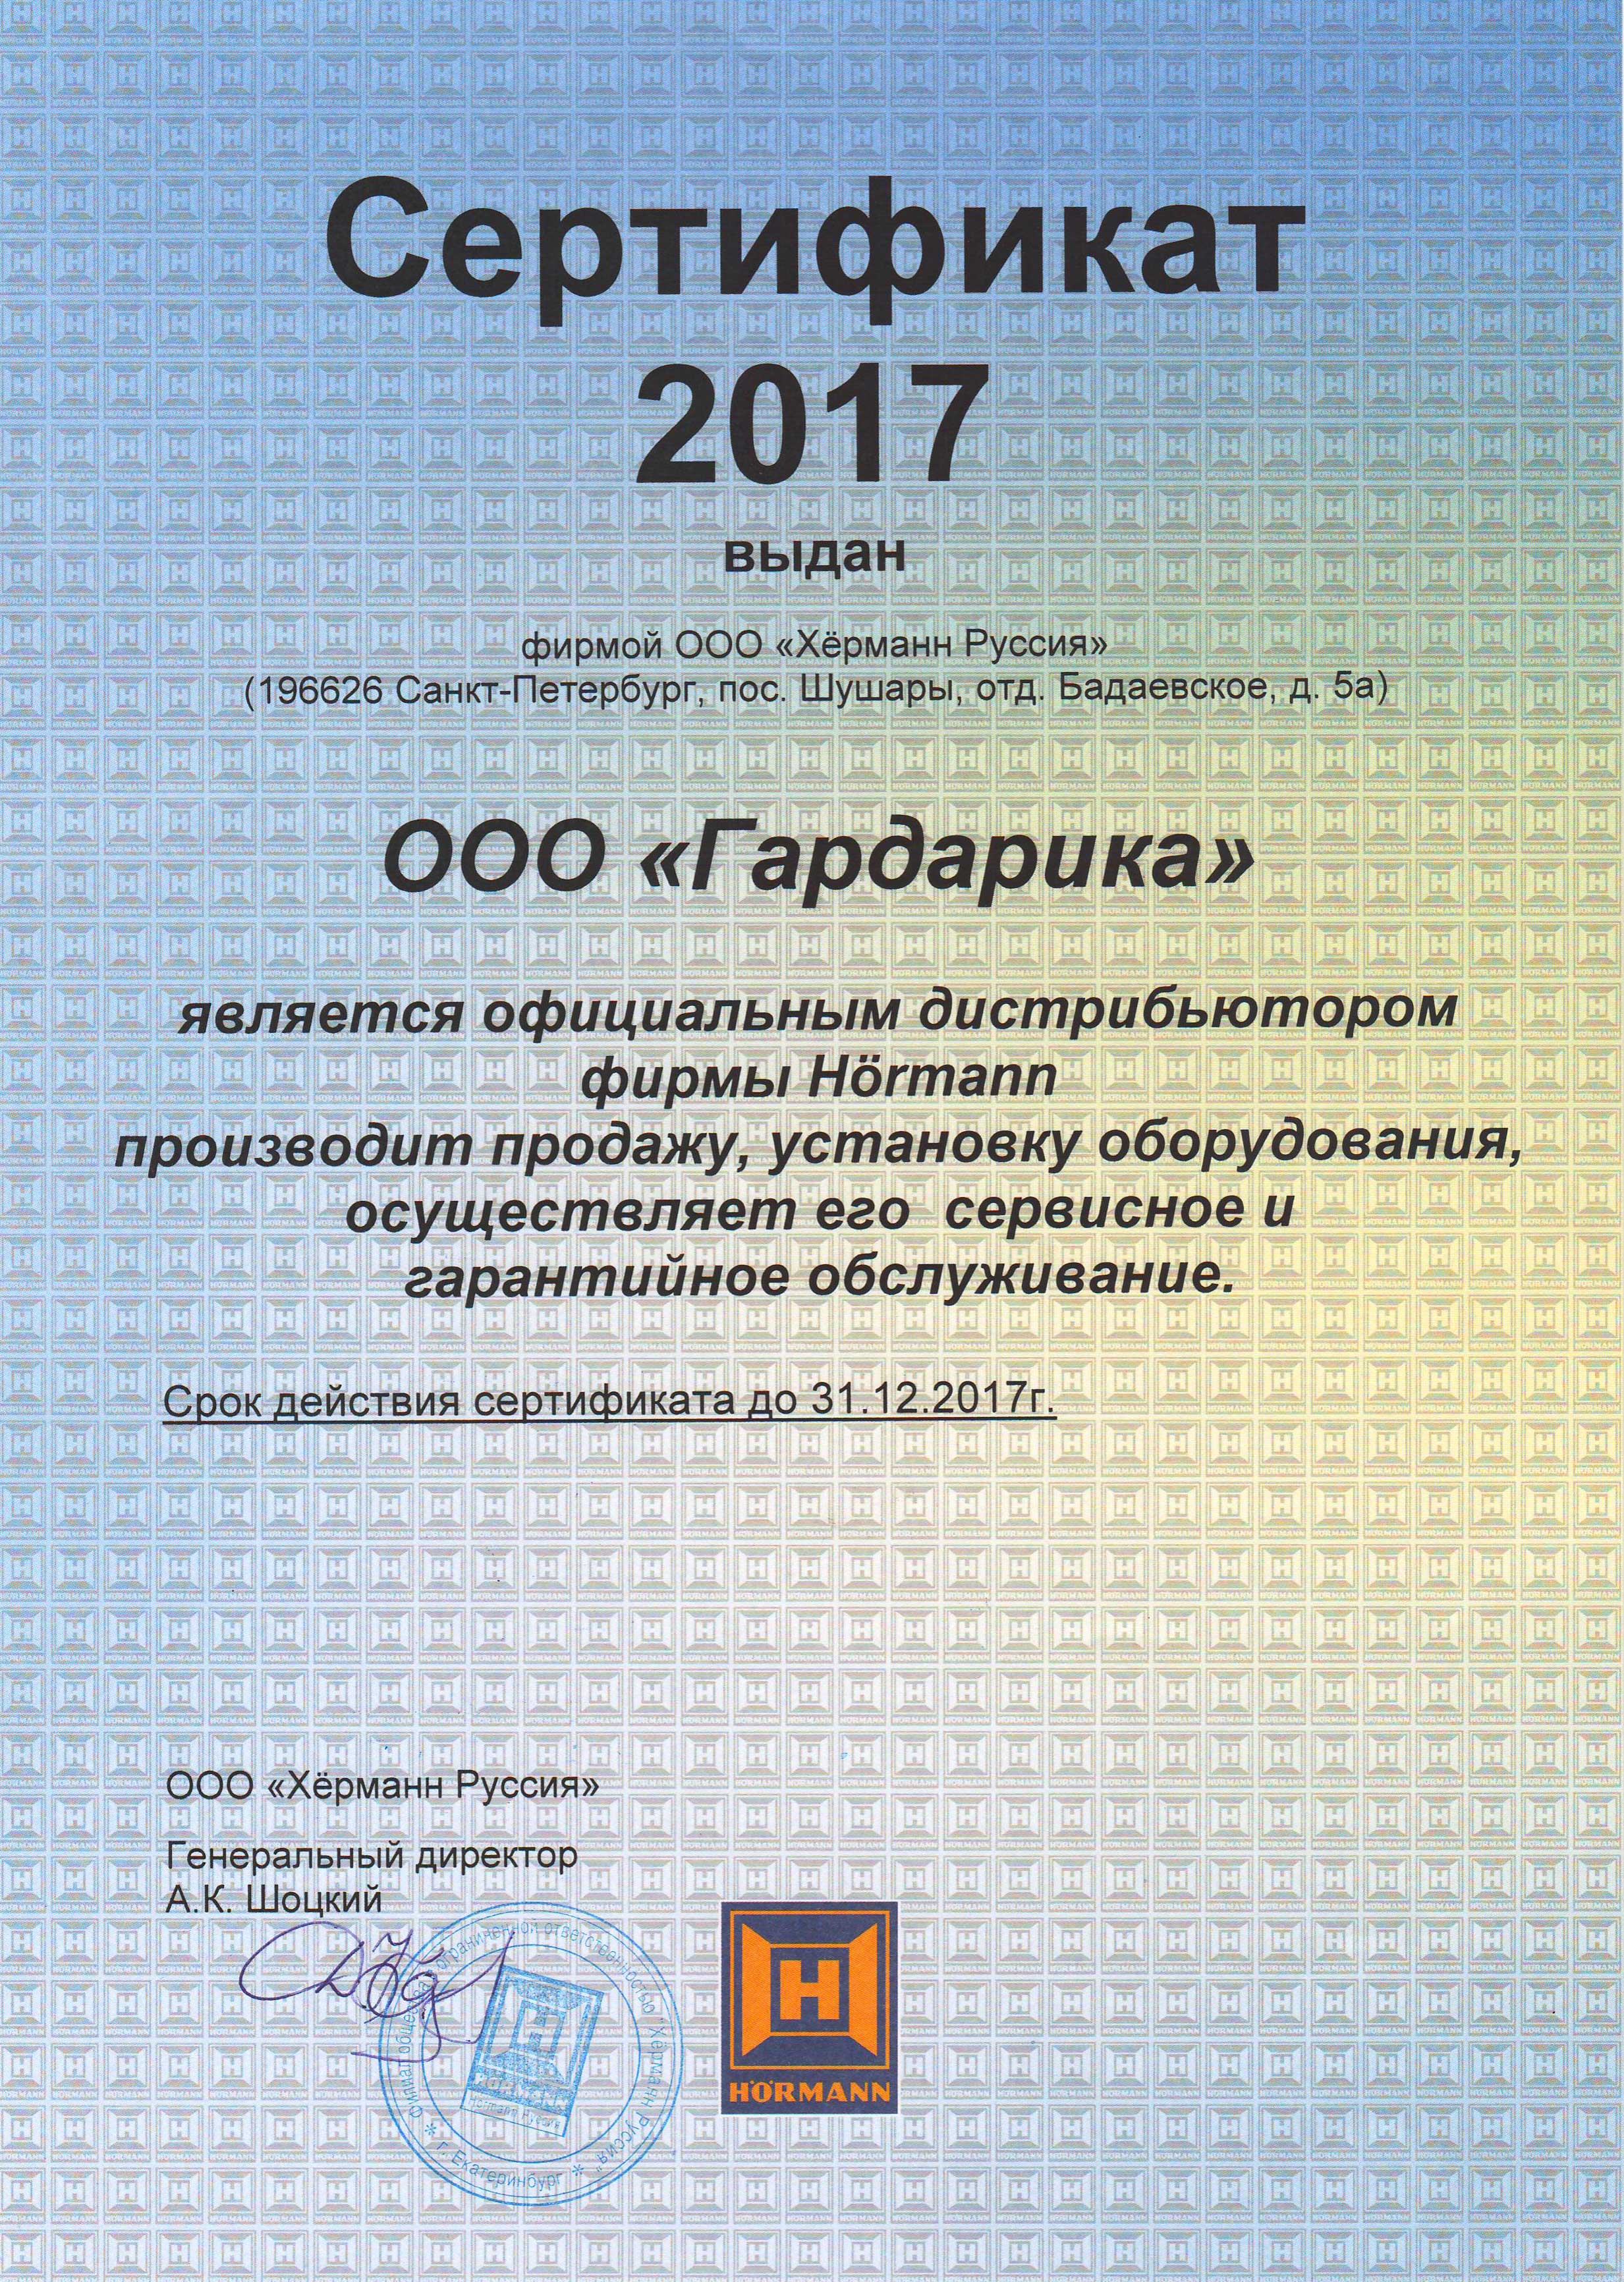 Сертификат дистрибьютора Hormann 2017